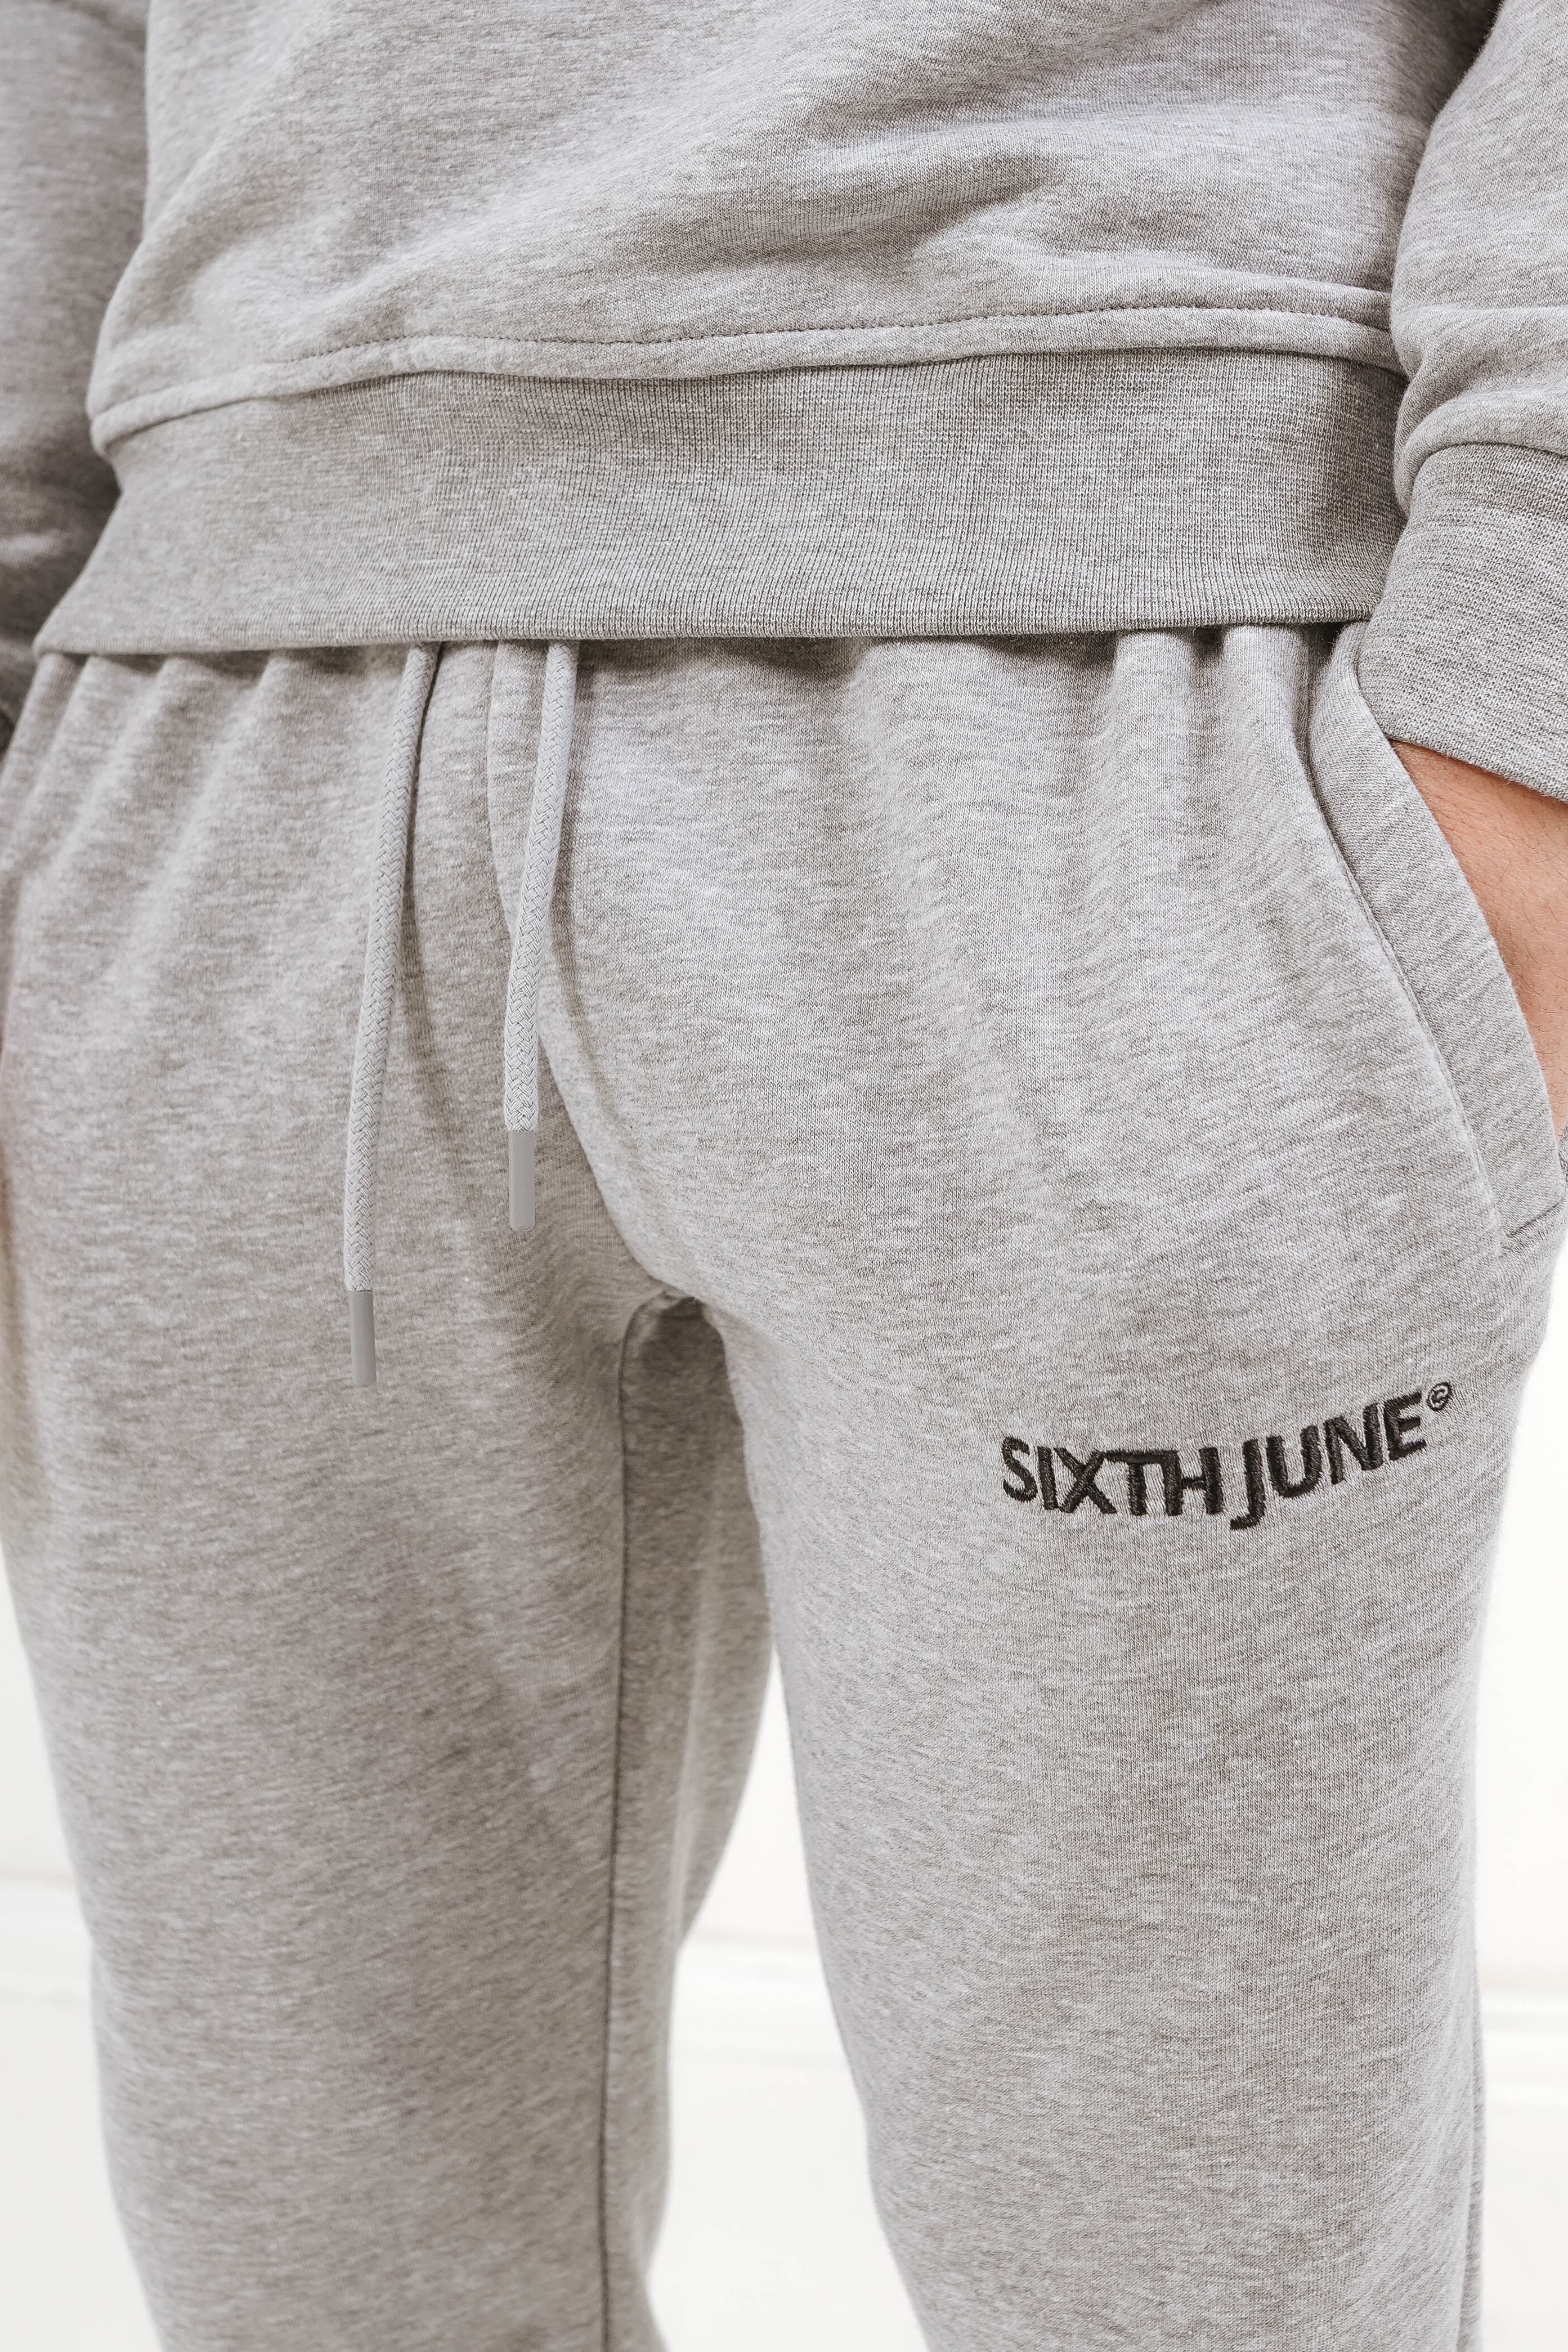 Sixth June - Jogging soft logo brodé Gris